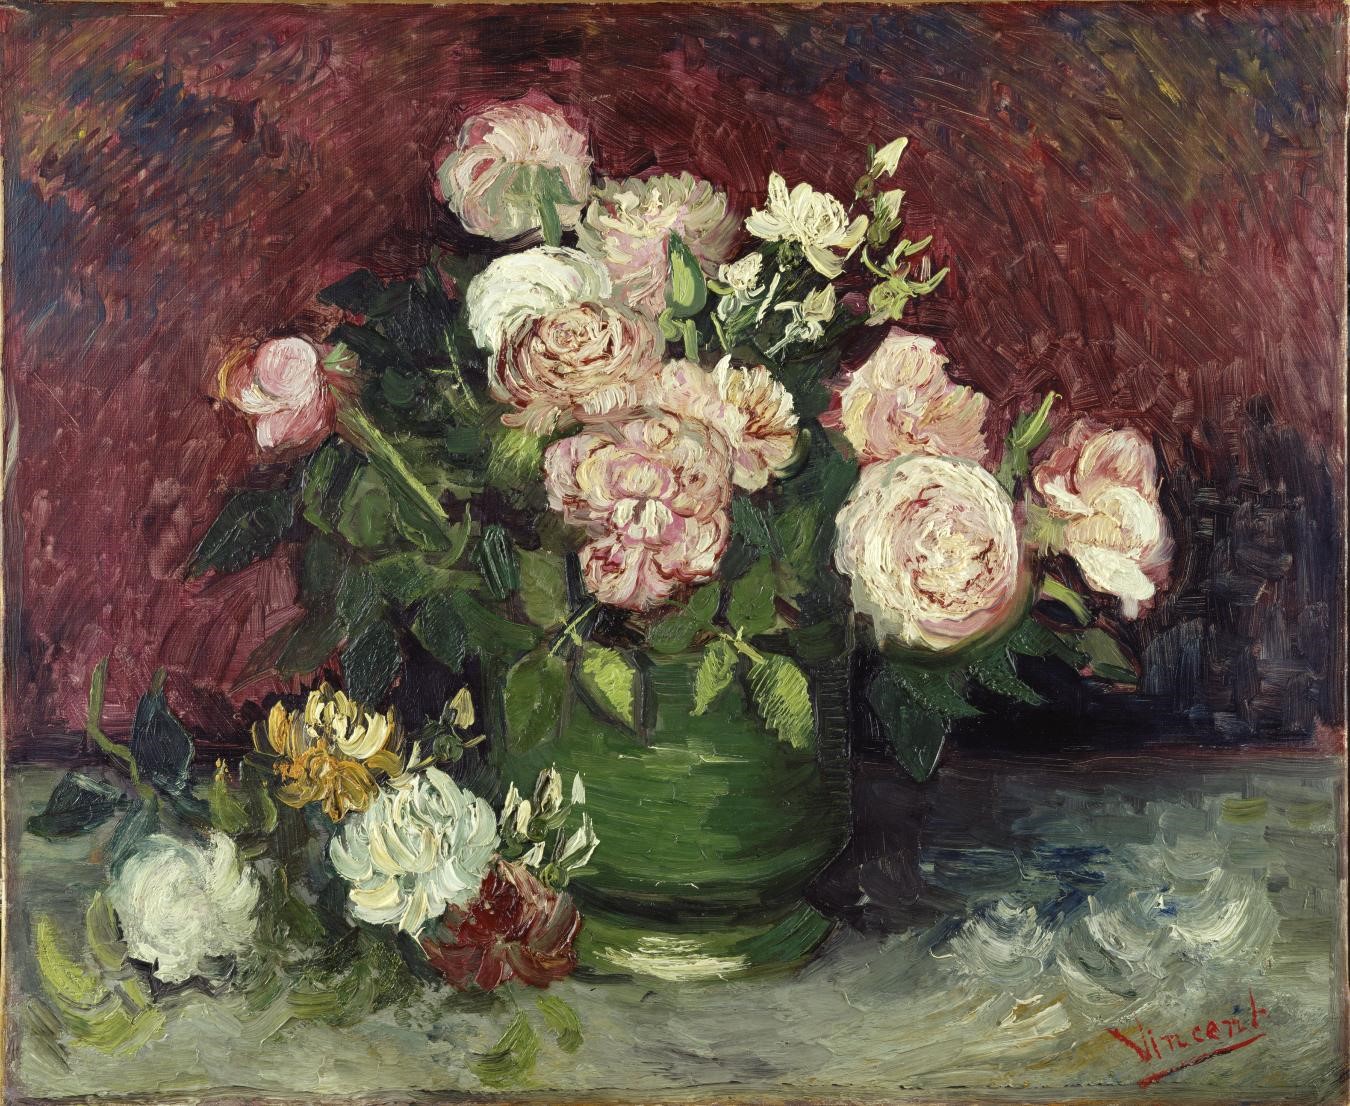 Vincent van Gogh, Roses and Peonies, 1886, oil on canvas, Kröller-Müller Museum, Otterlo. © Kröller-Müller Museum